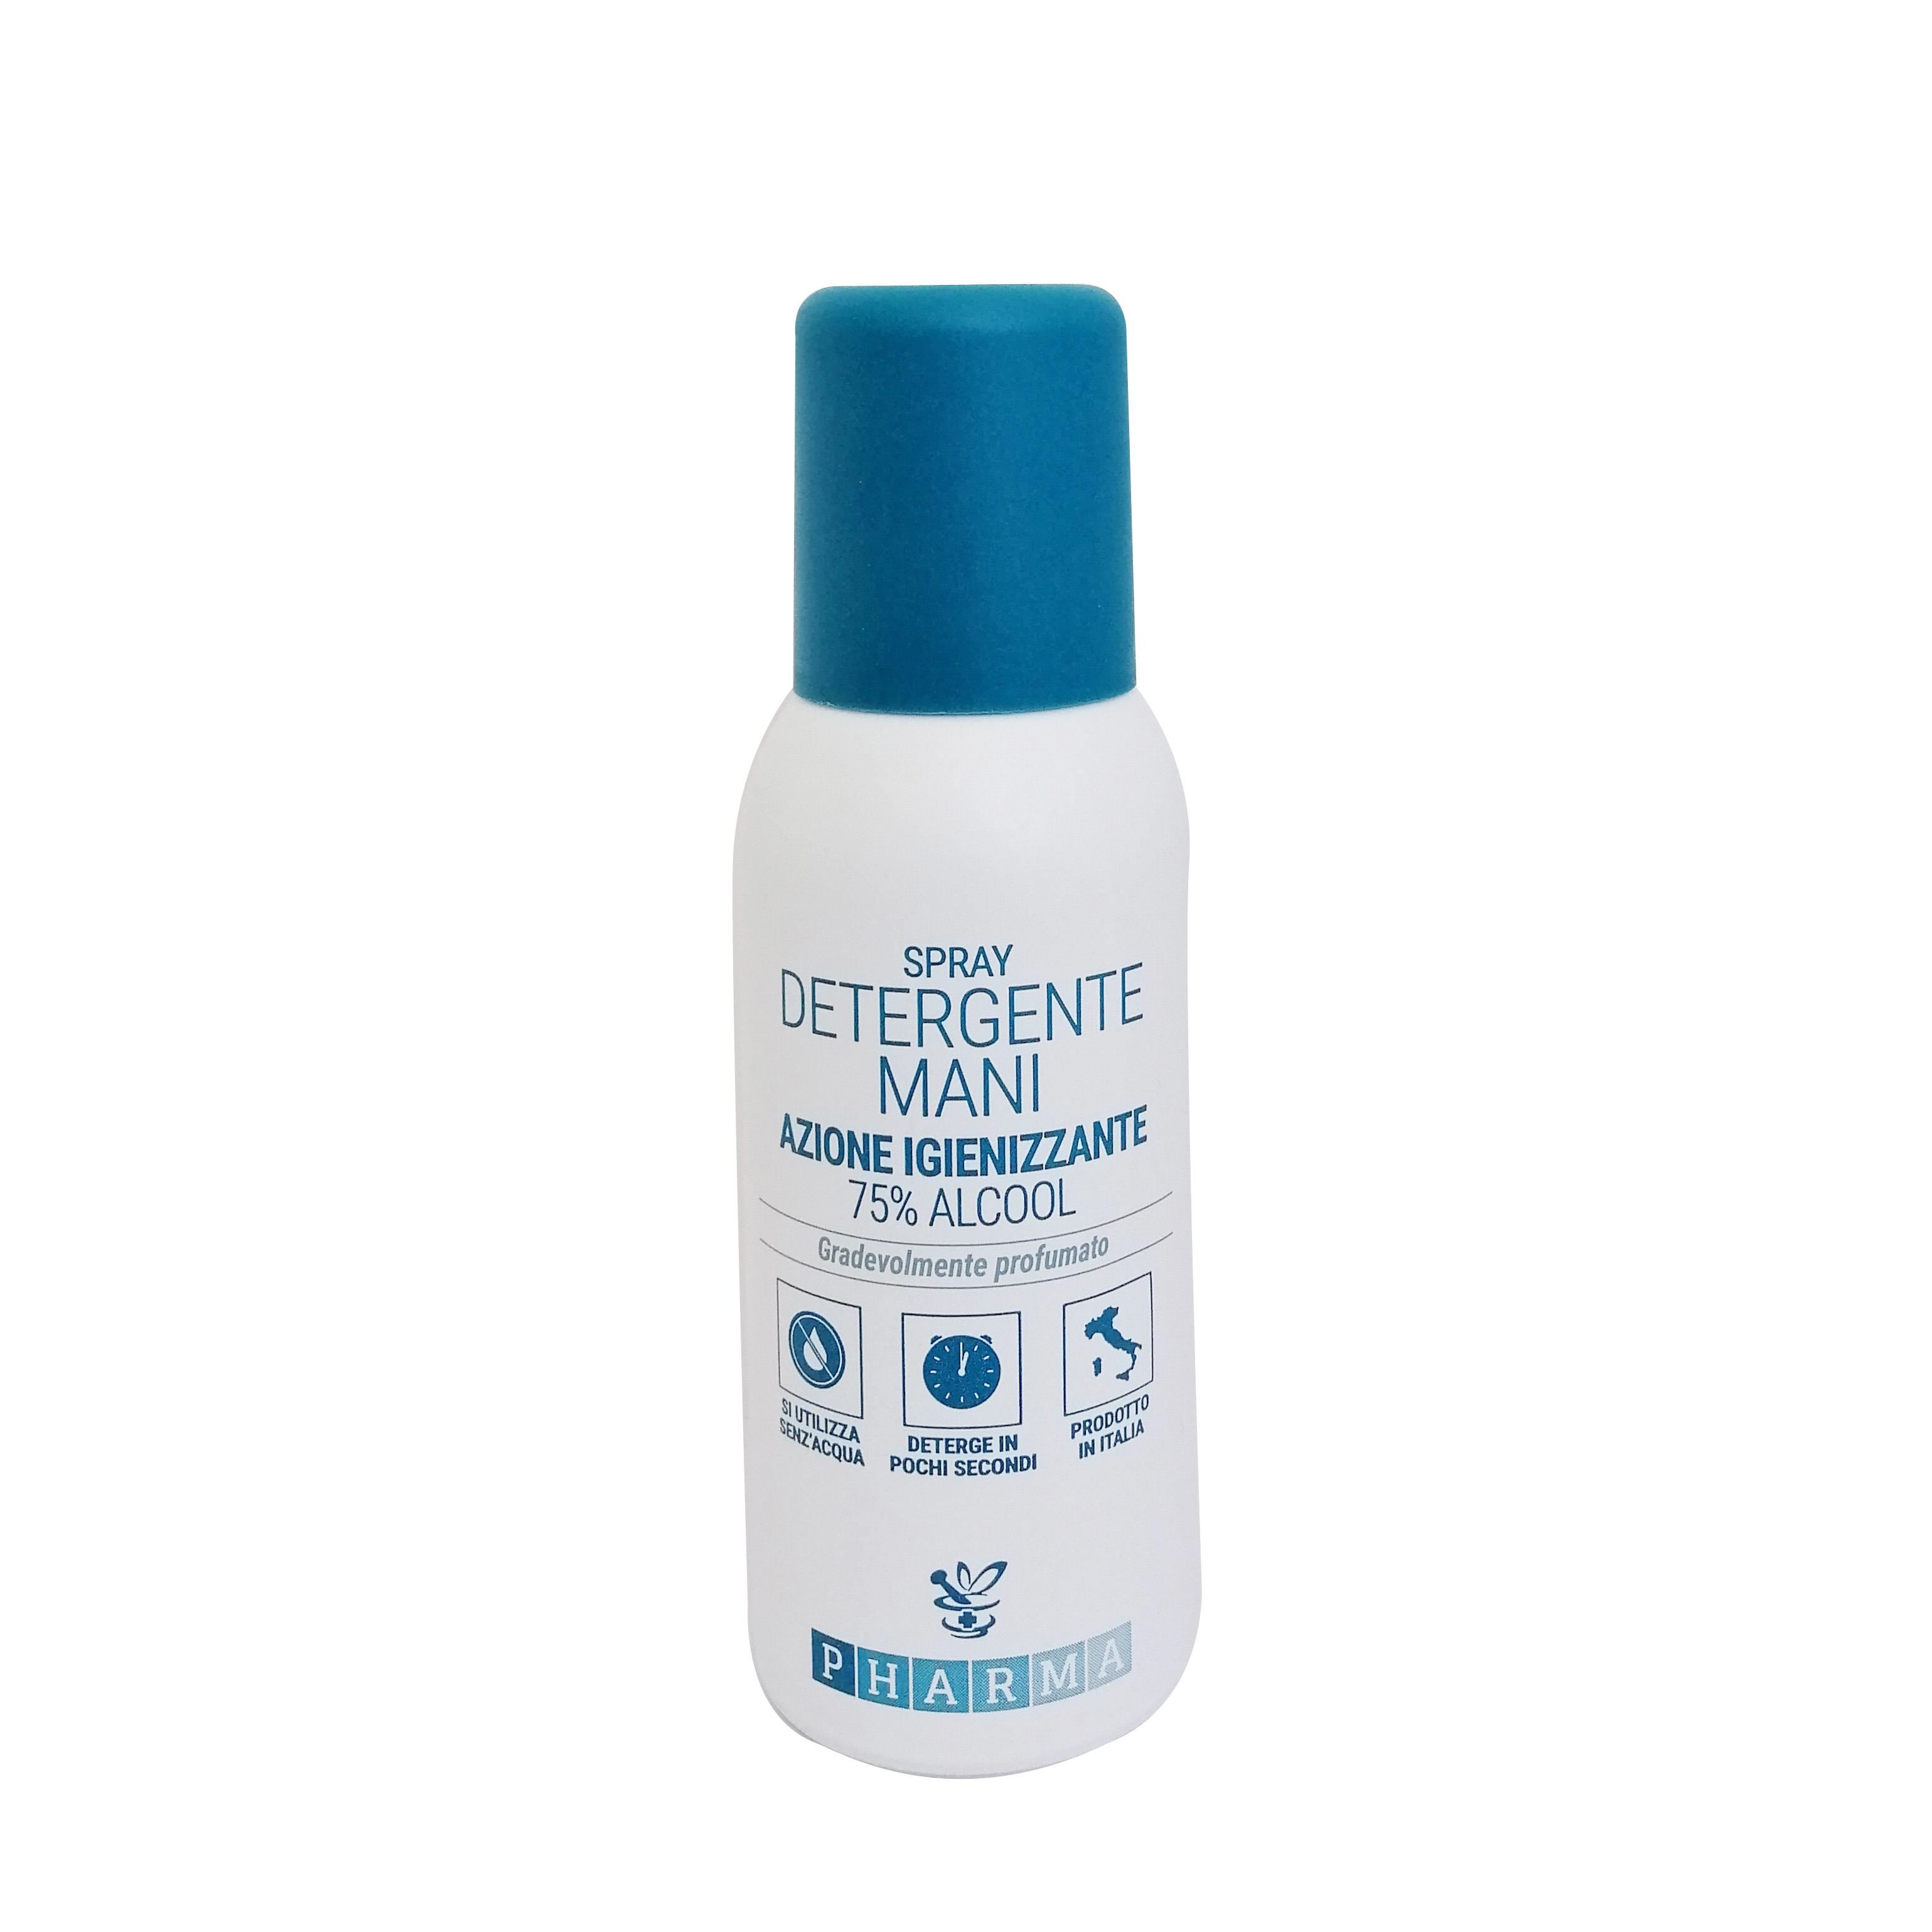 Spray detergente mani Pharma - 100 ml